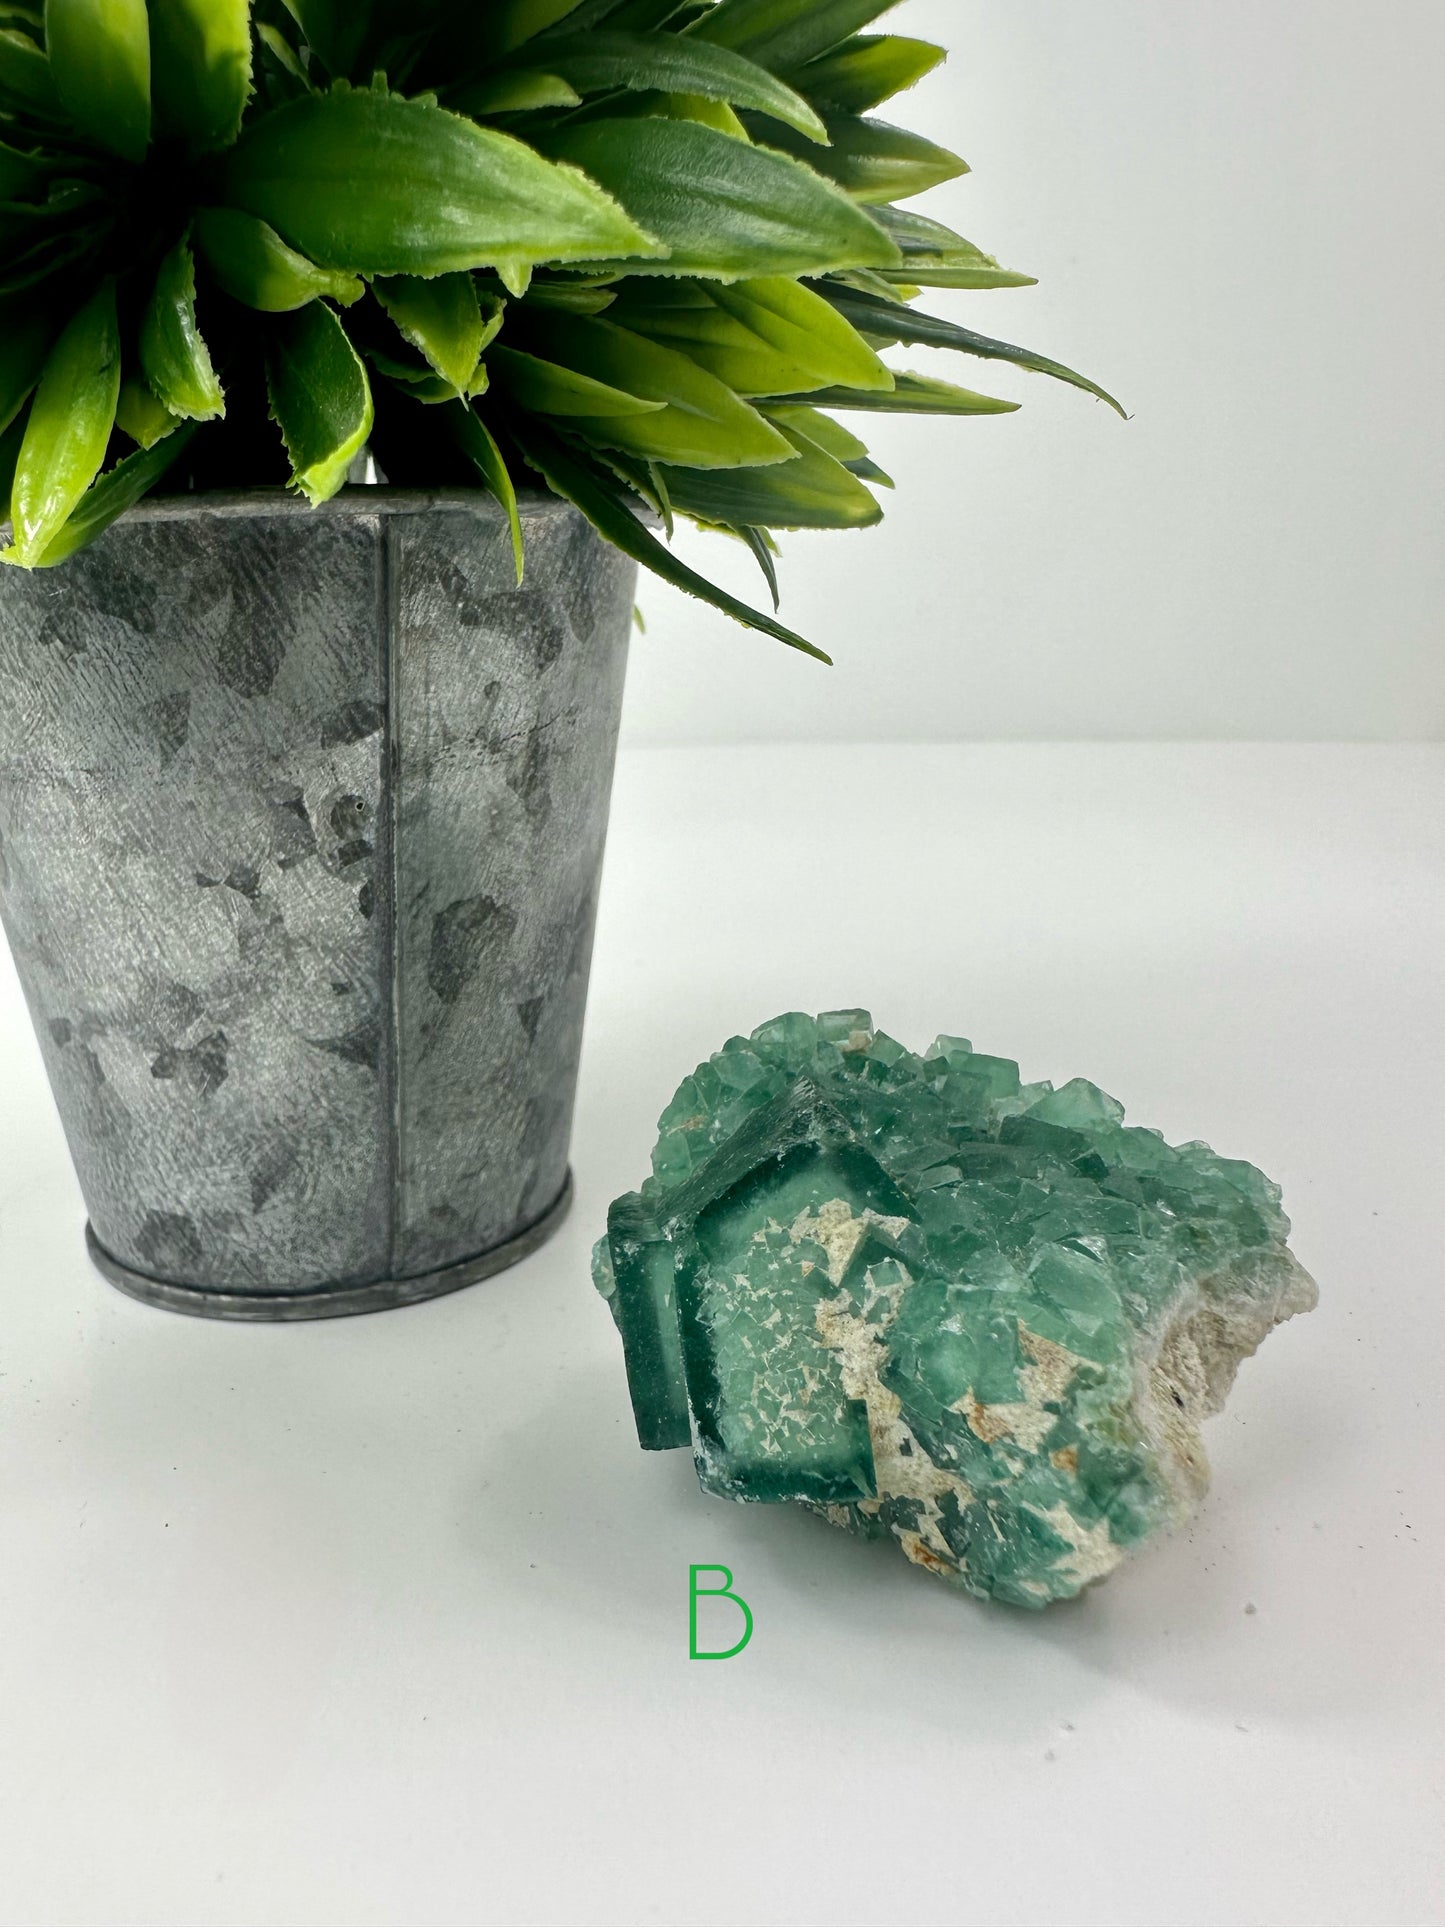 Green Fluorite (Emerald Green) Raw Specimen B